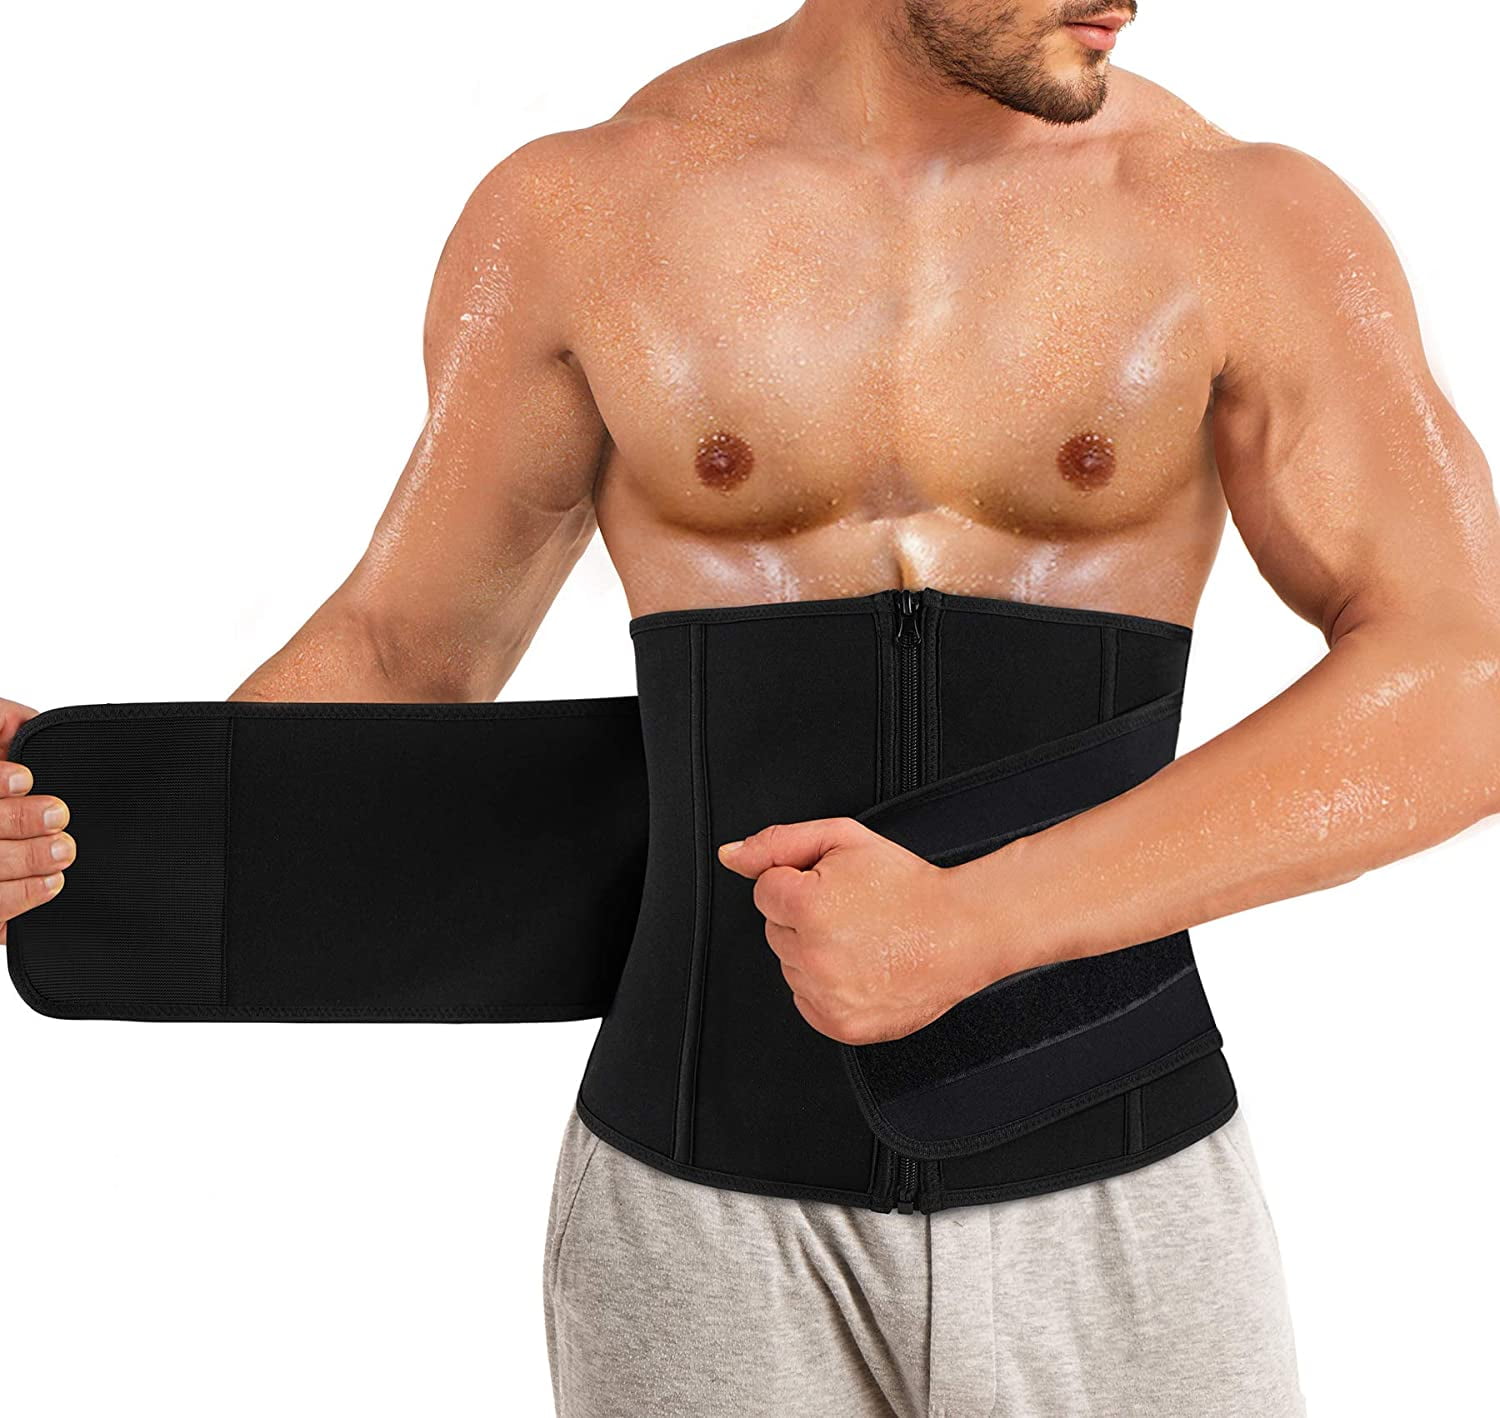 Women & Men Waist Trainer Body Shaper Slimmer Sweat Belt Tummy Control Band US 